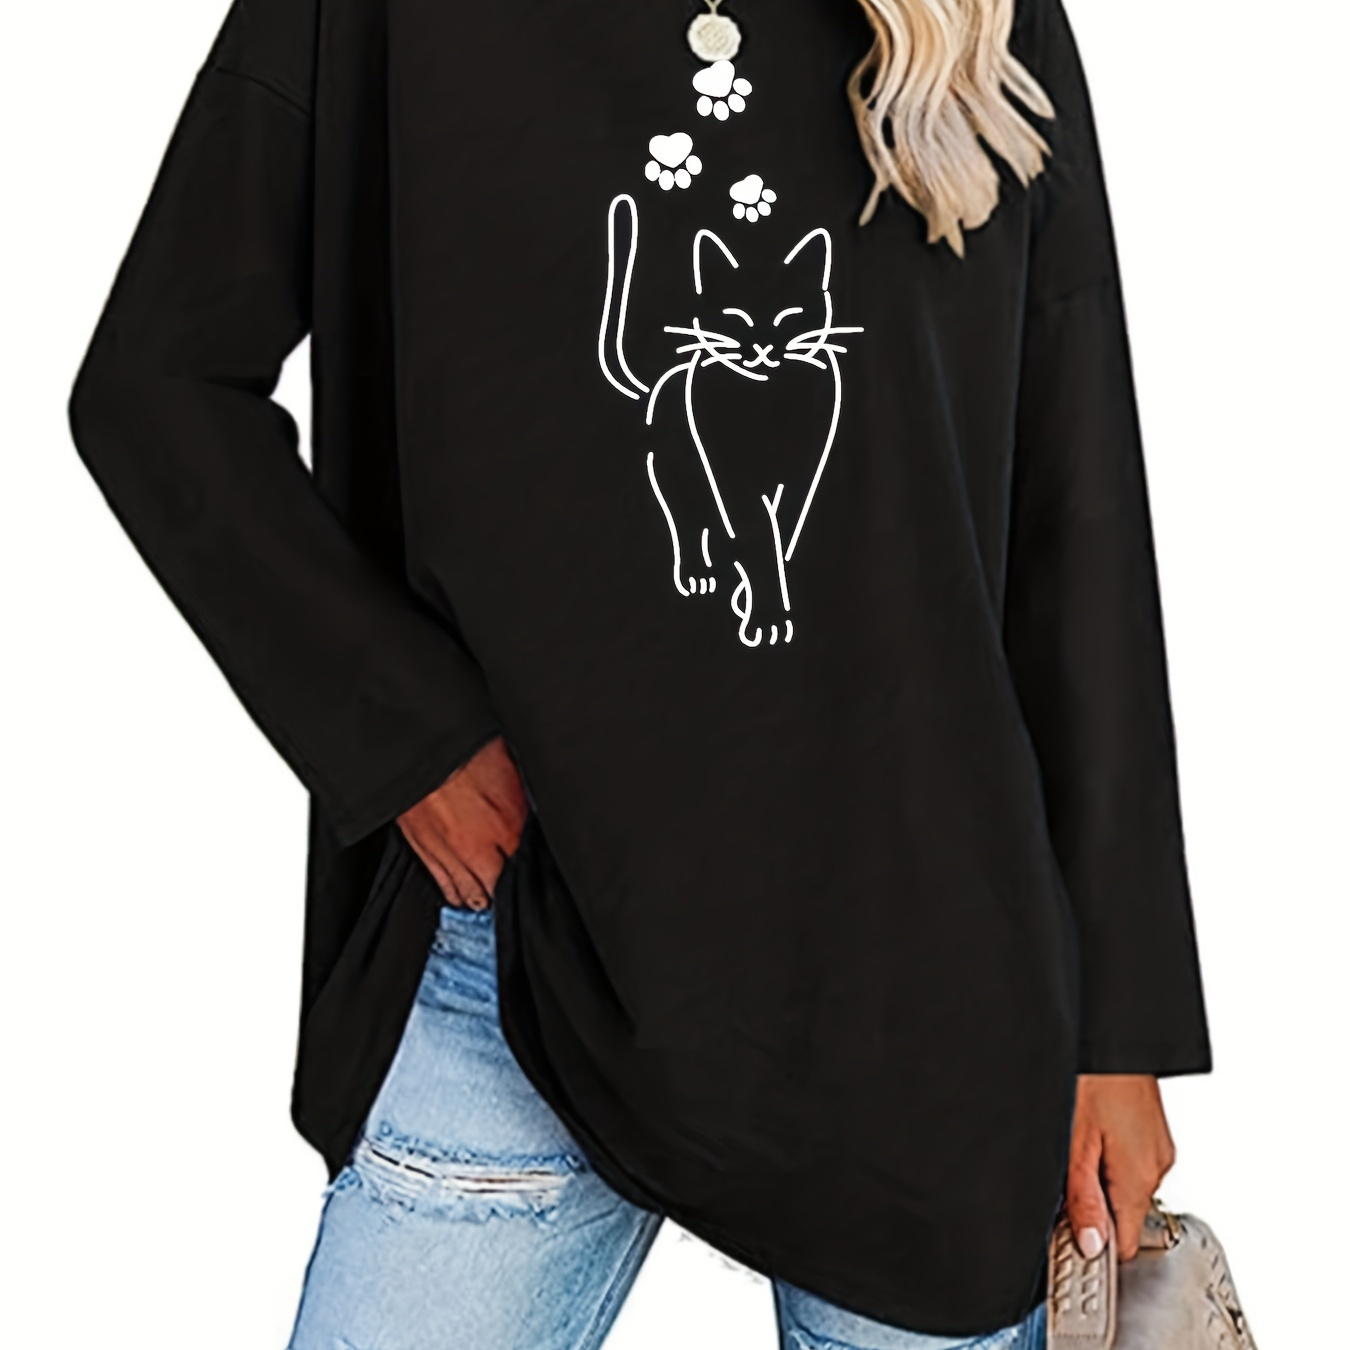 

Cat & Paw Print T-shirt, Casual Long Sleeve Crew Neck Top, Women's Clothing